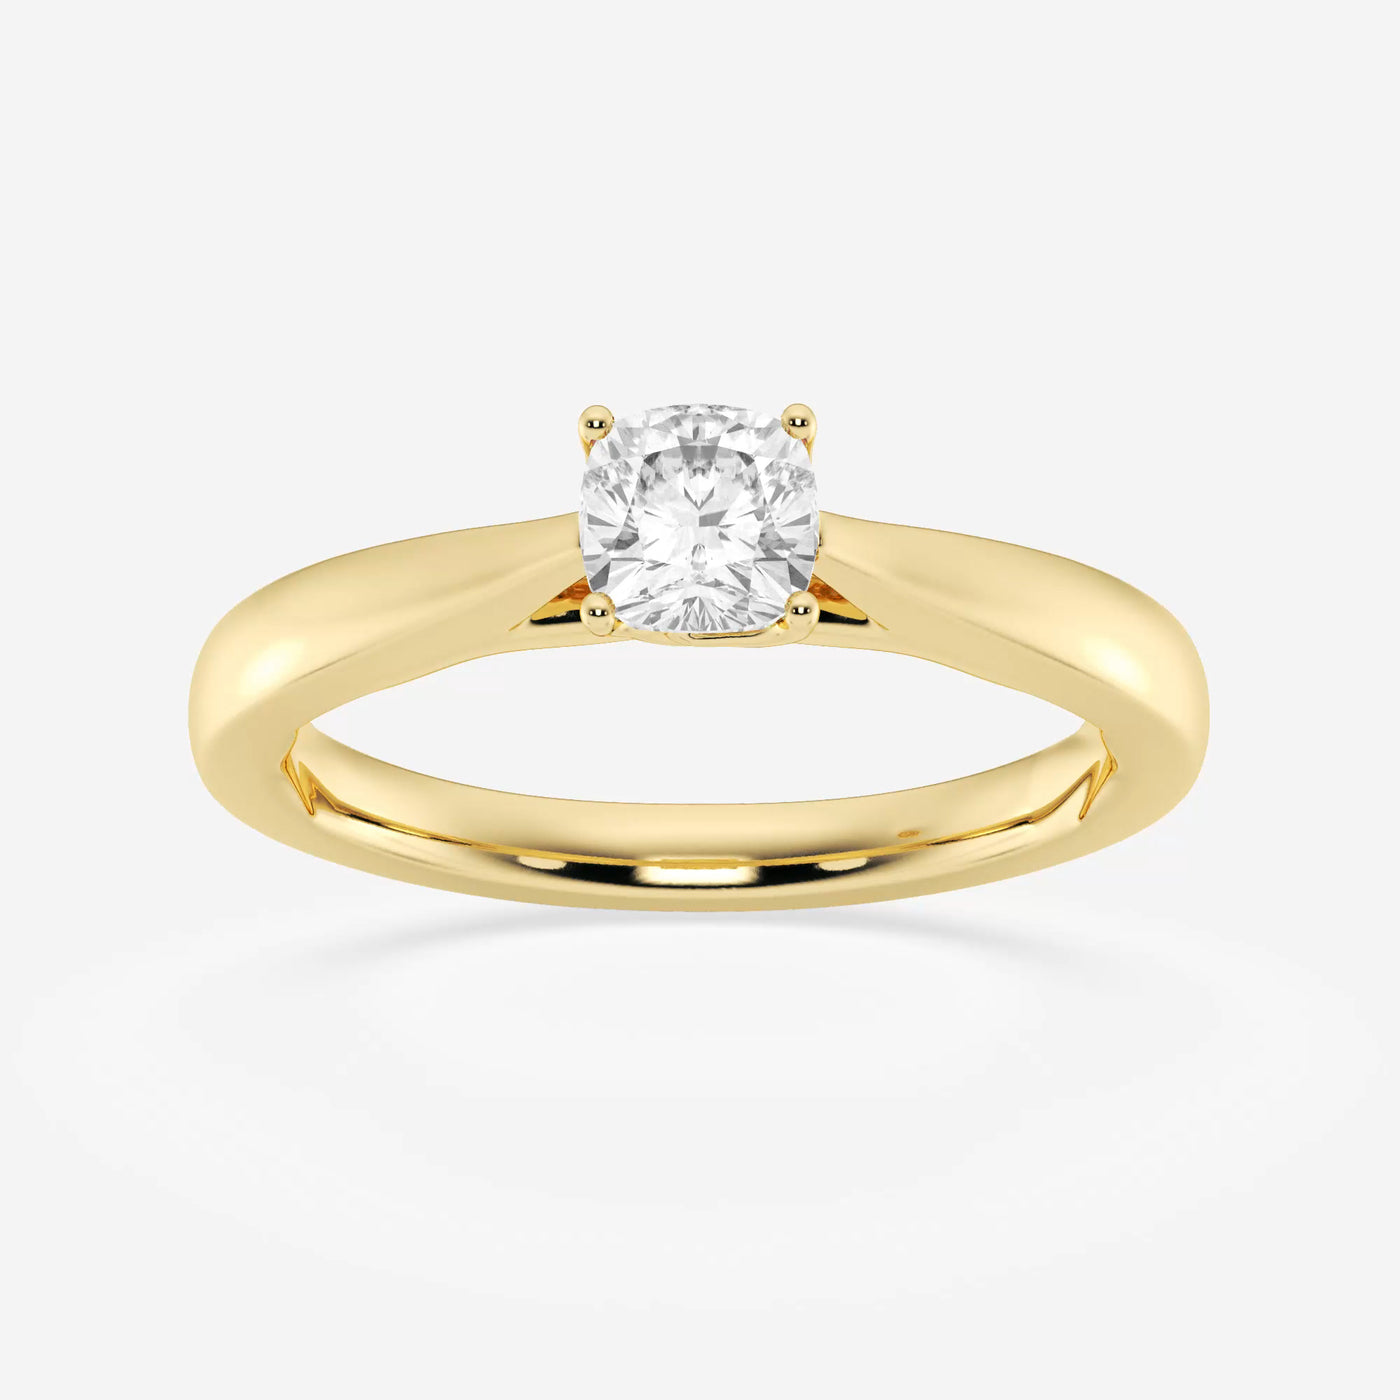 _main_image@SKU:LGD-TXR01768-GY4~#carat_0.50#diamond-quality_fg,-vs2+#metal_18k-yellow-gold